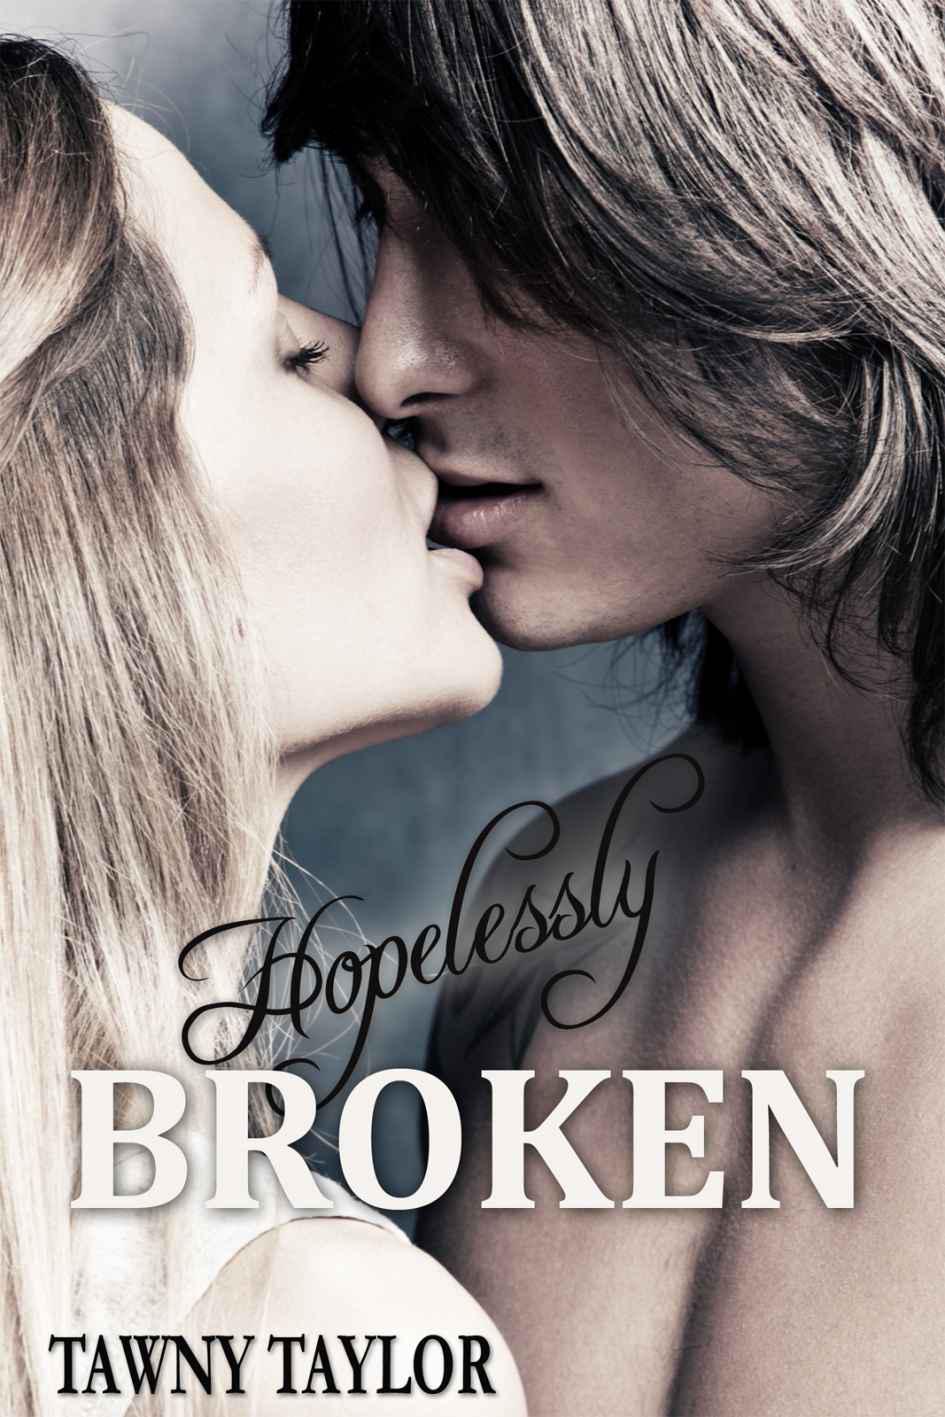 Hopelessly Broken by Tawny Taylor